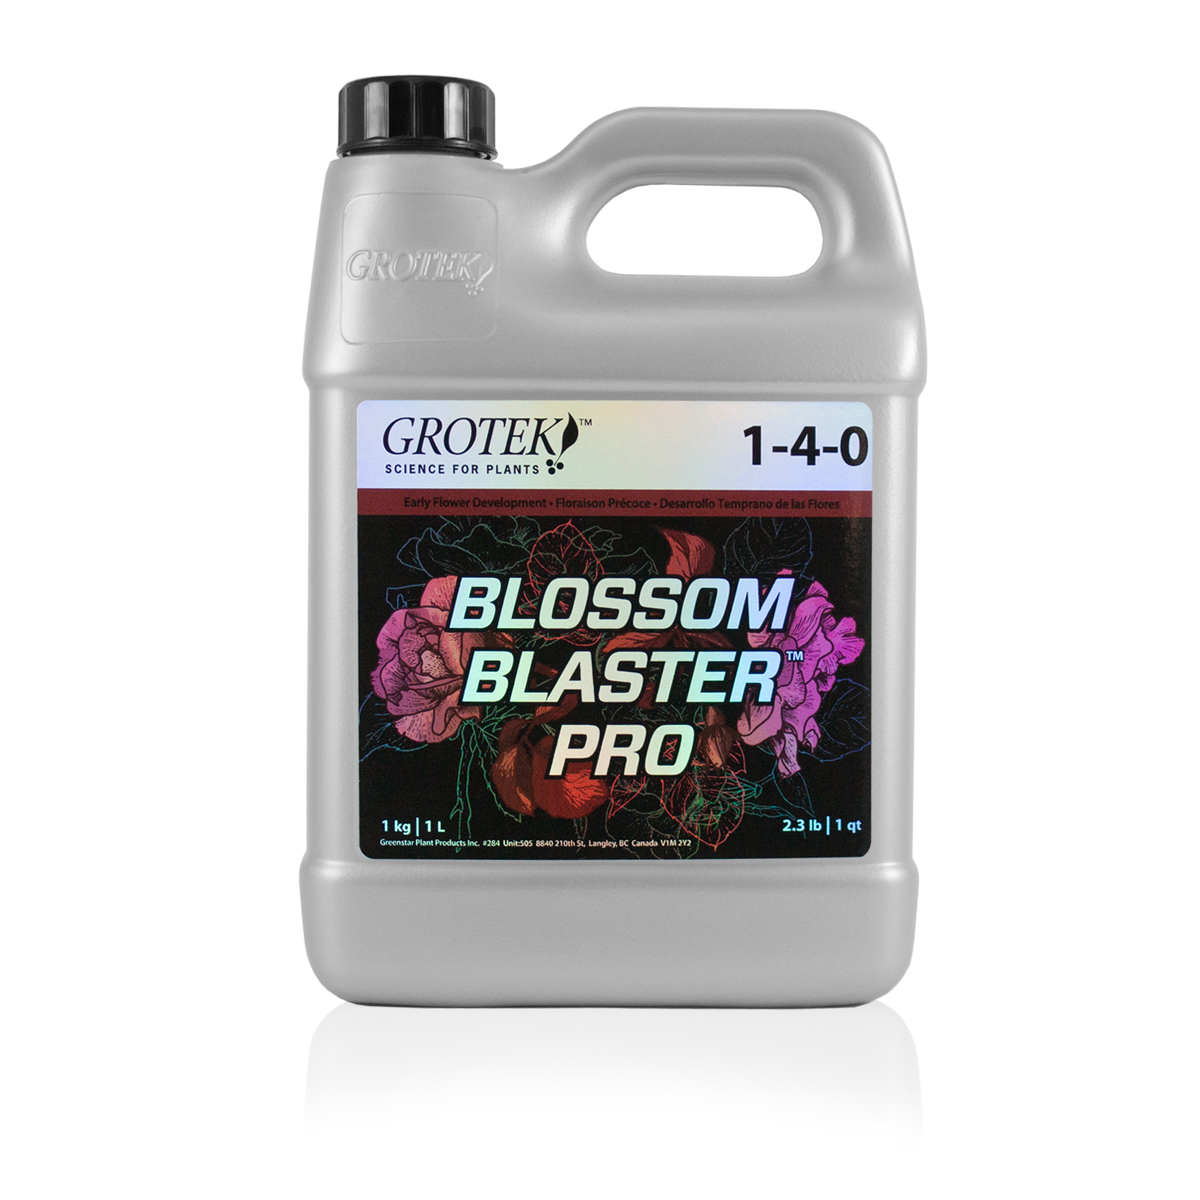 Blossom Blaster Pro by 